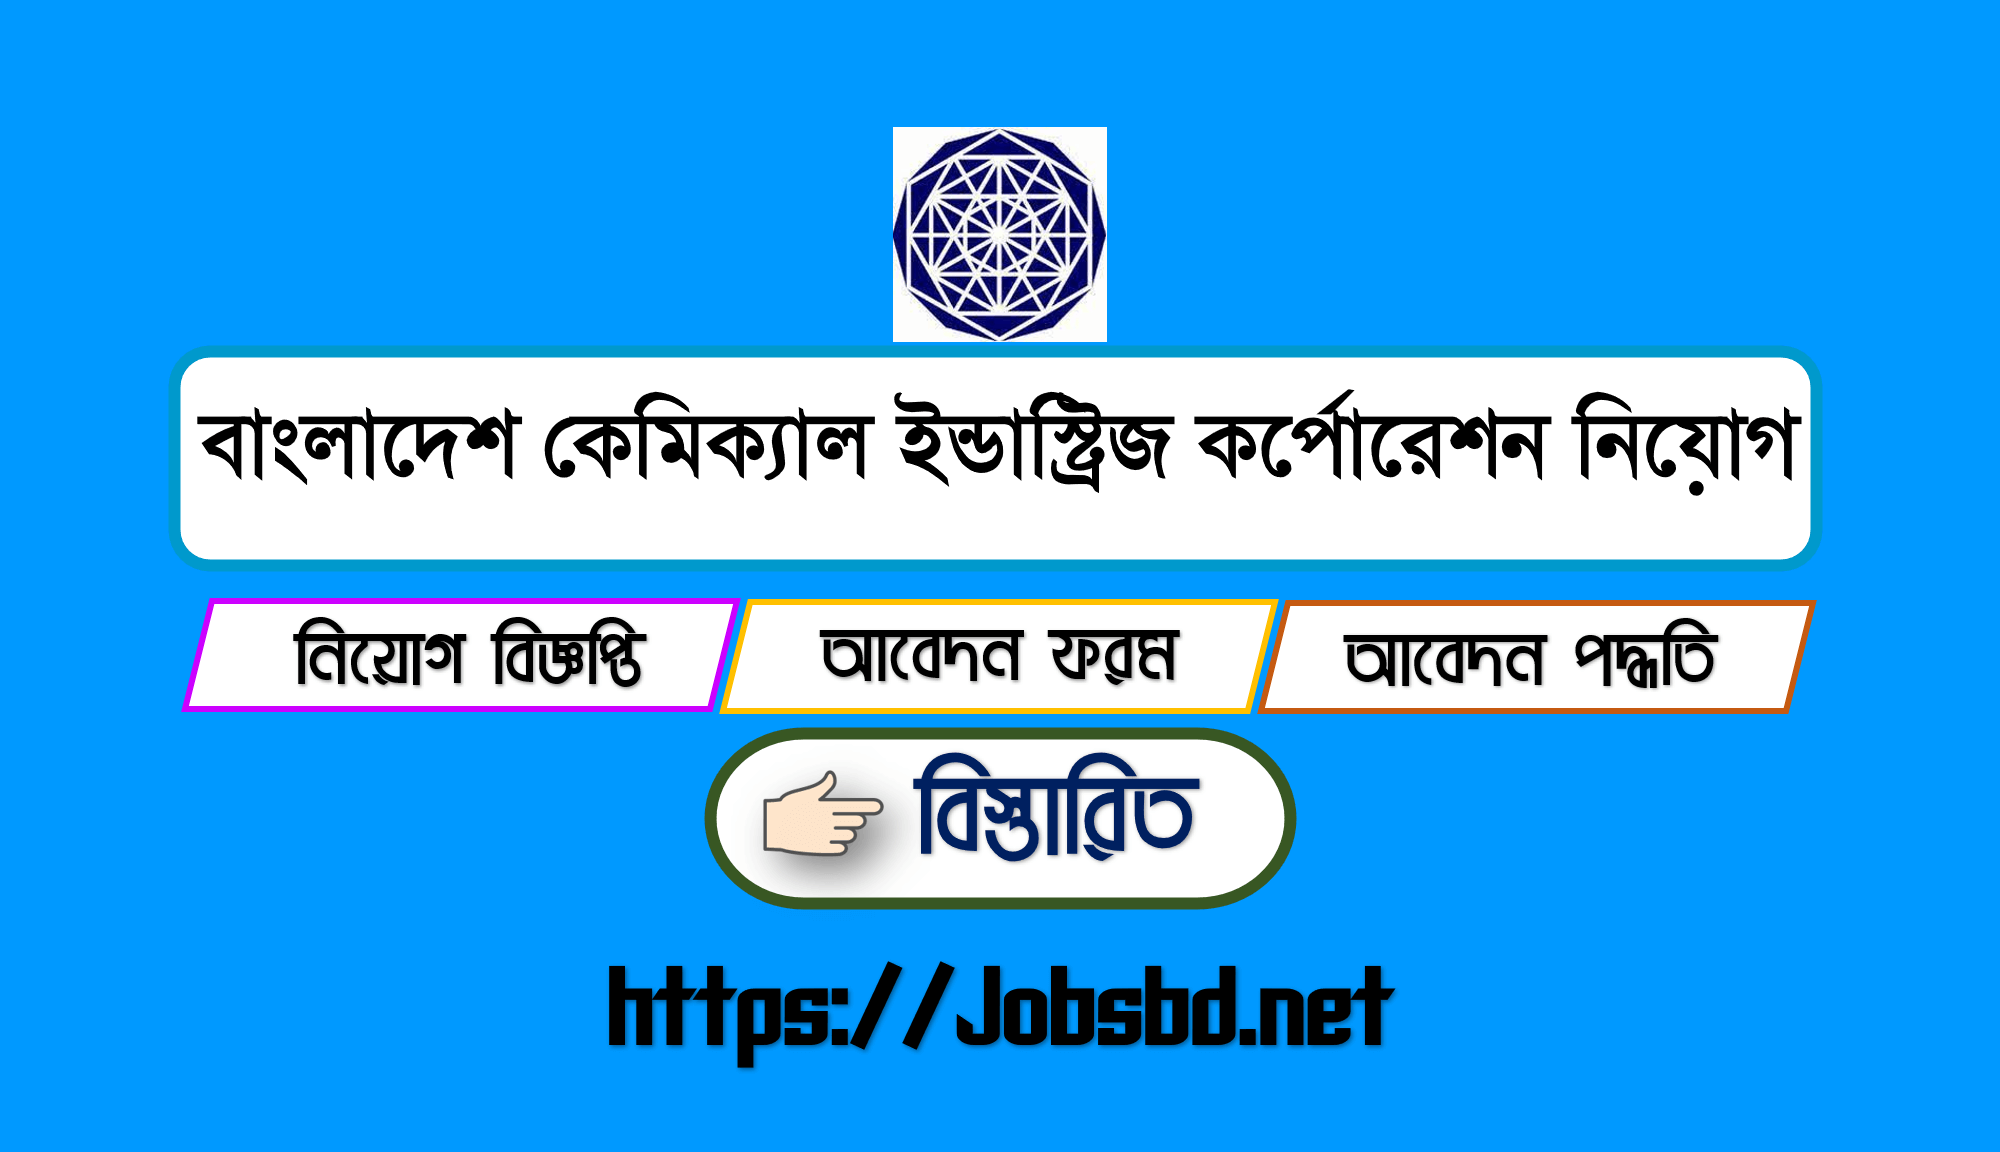 Bangladesh Chemical Industries Corporation Job Circular